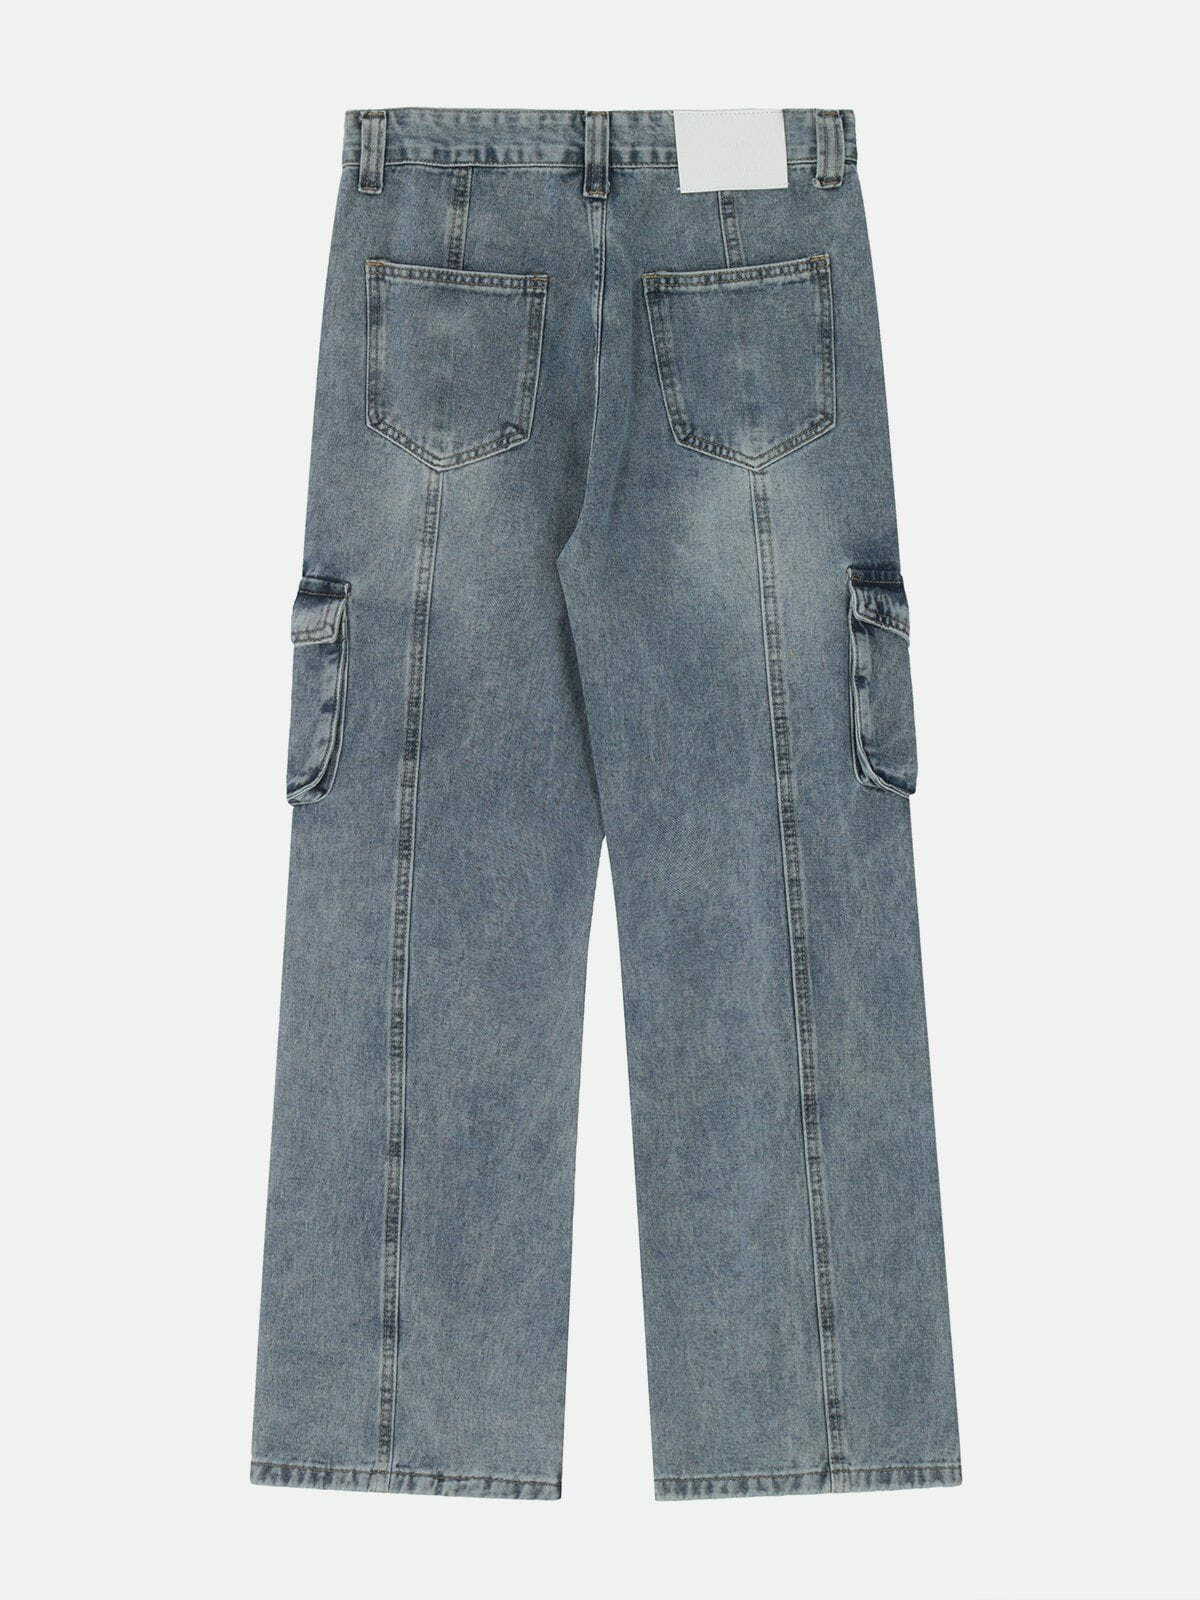 multipocket vintage jeans edgy & retro streetwear 5214